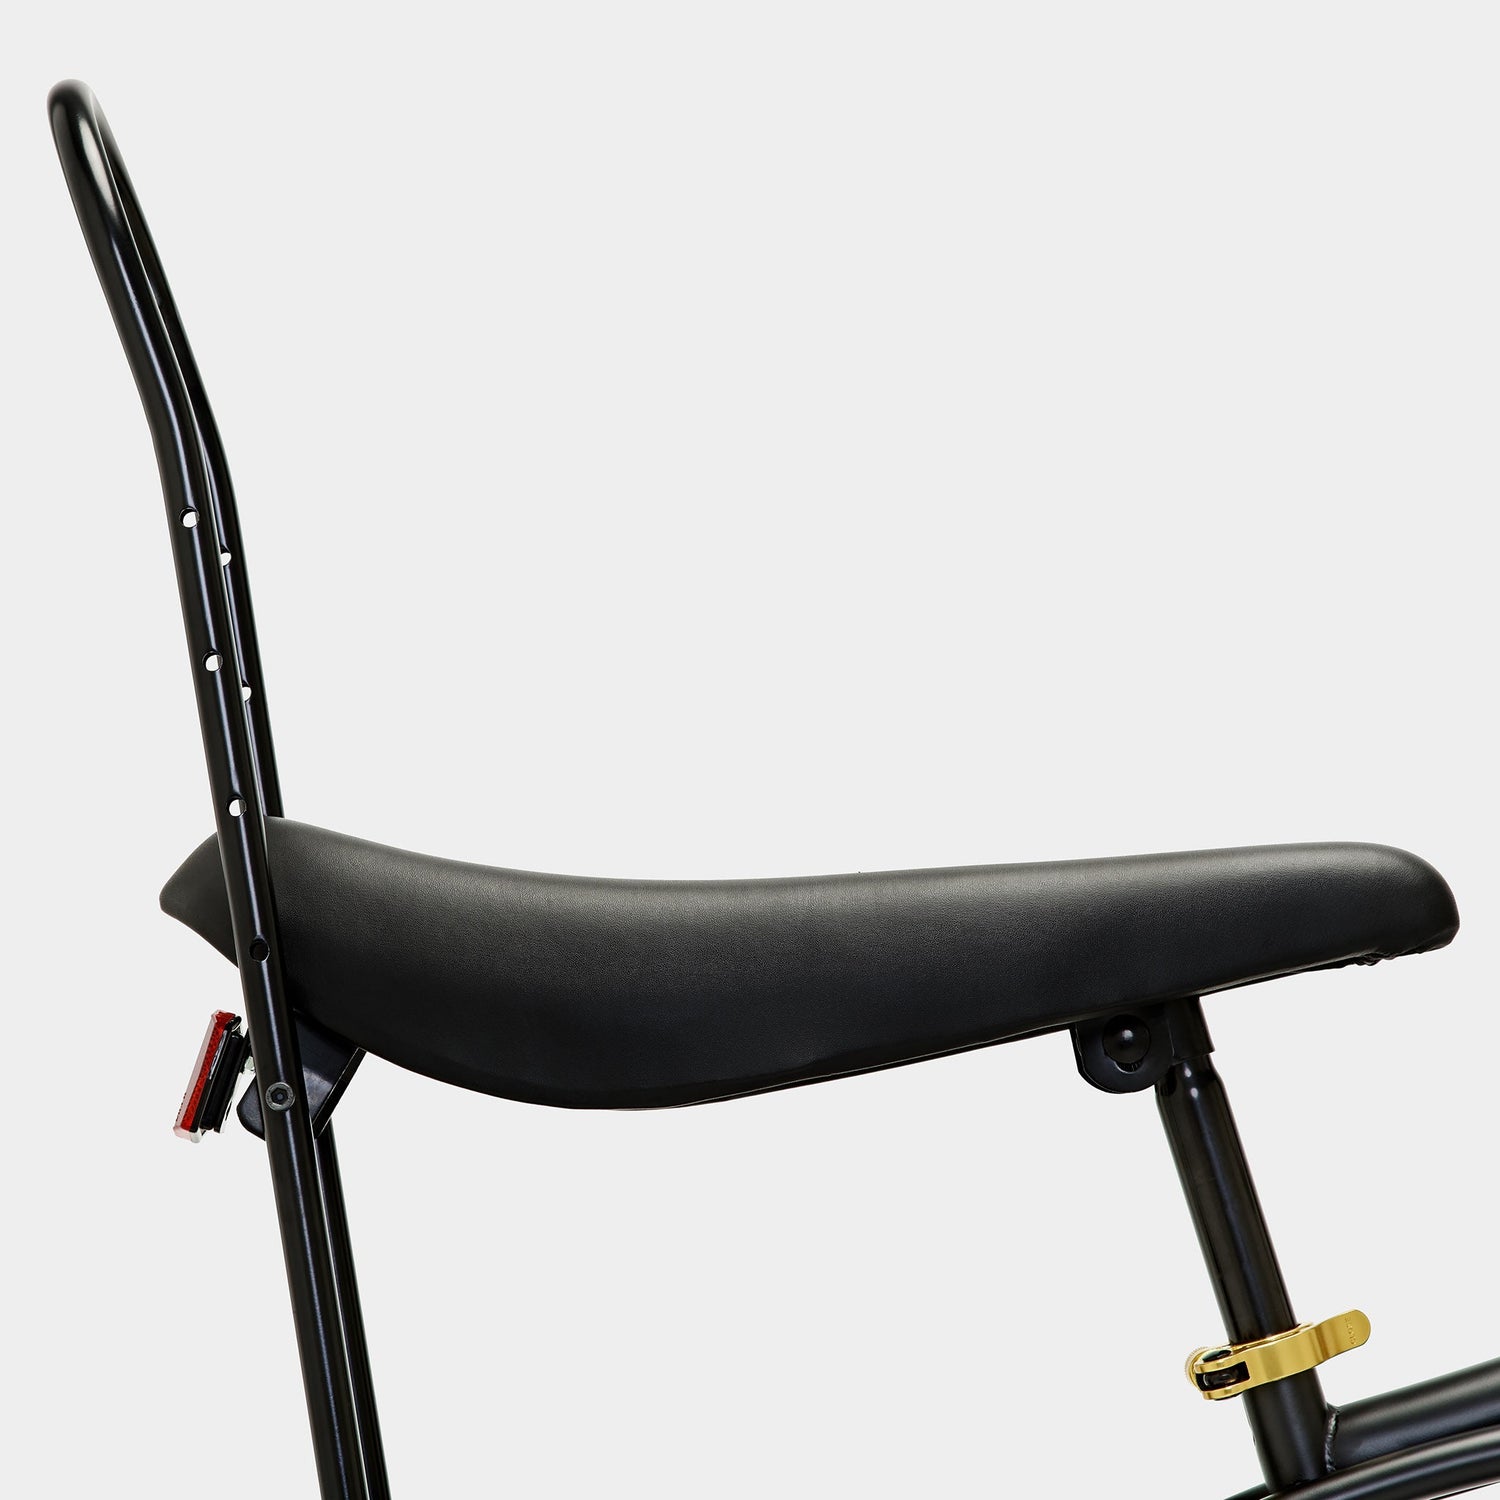 The seat for the Milkbar Bikes Sugar High 20" - Black Licorice